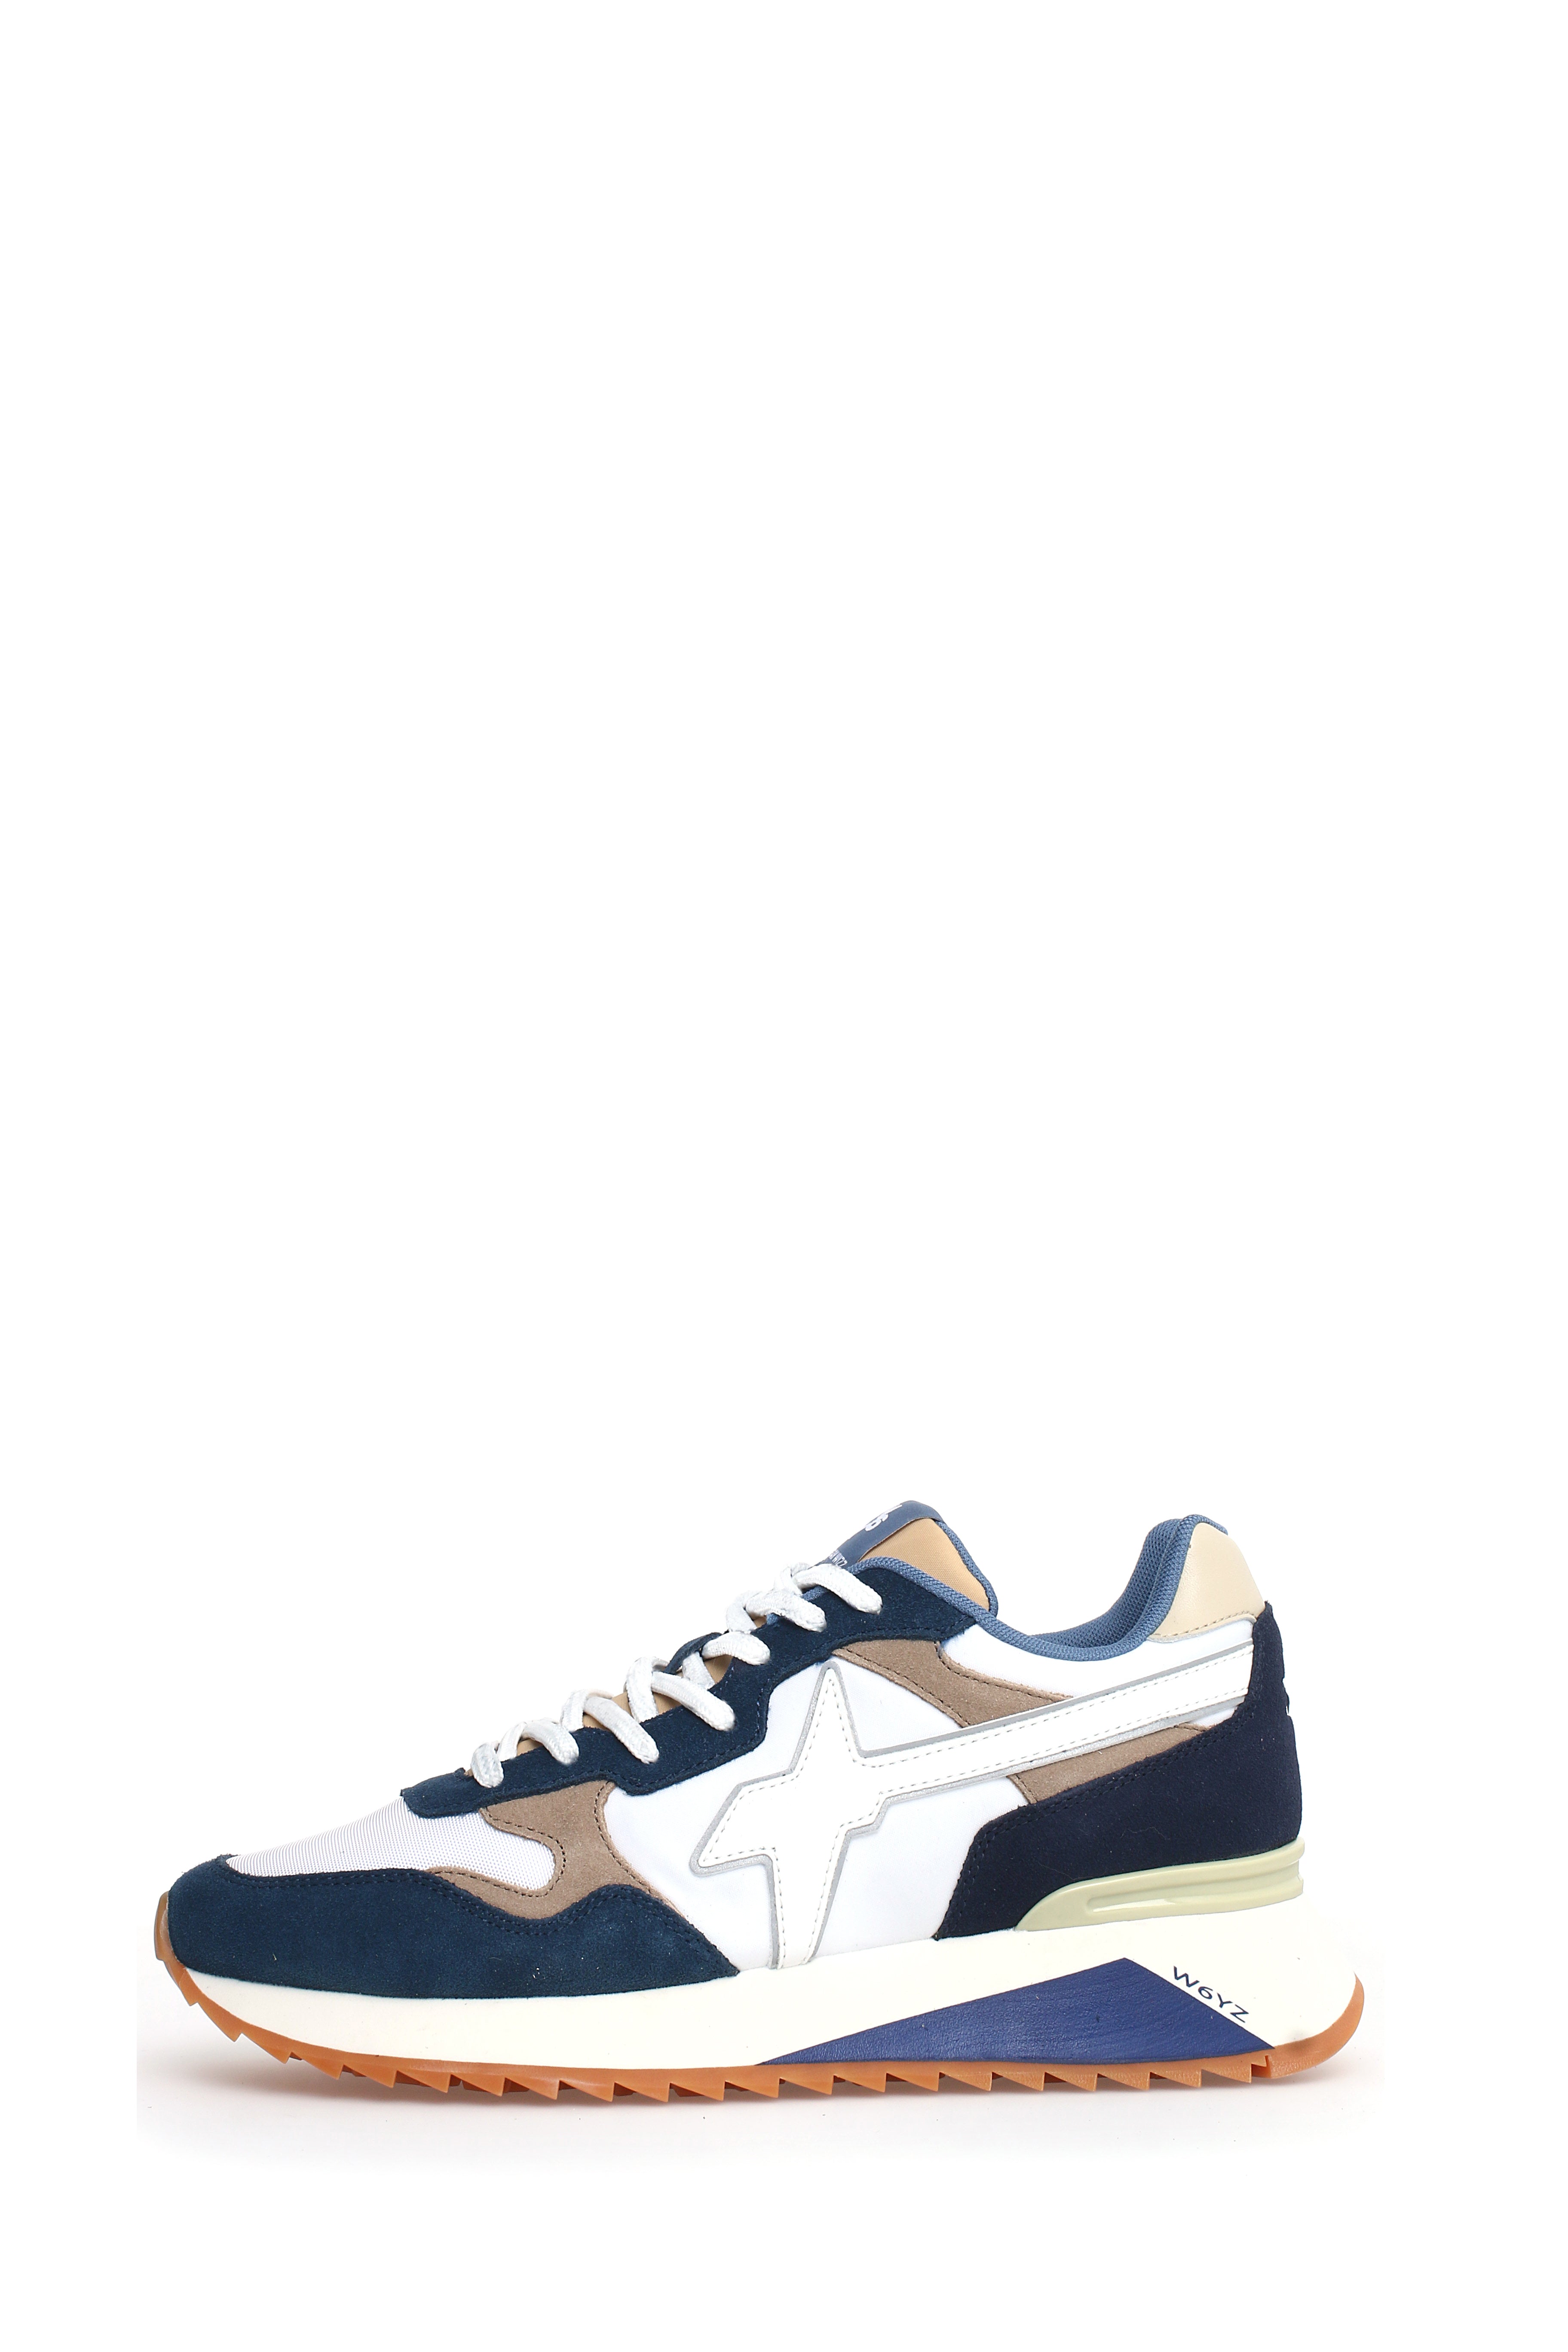 W6YZ-Sneaker Uomo Yak M-Bluette White Taupe